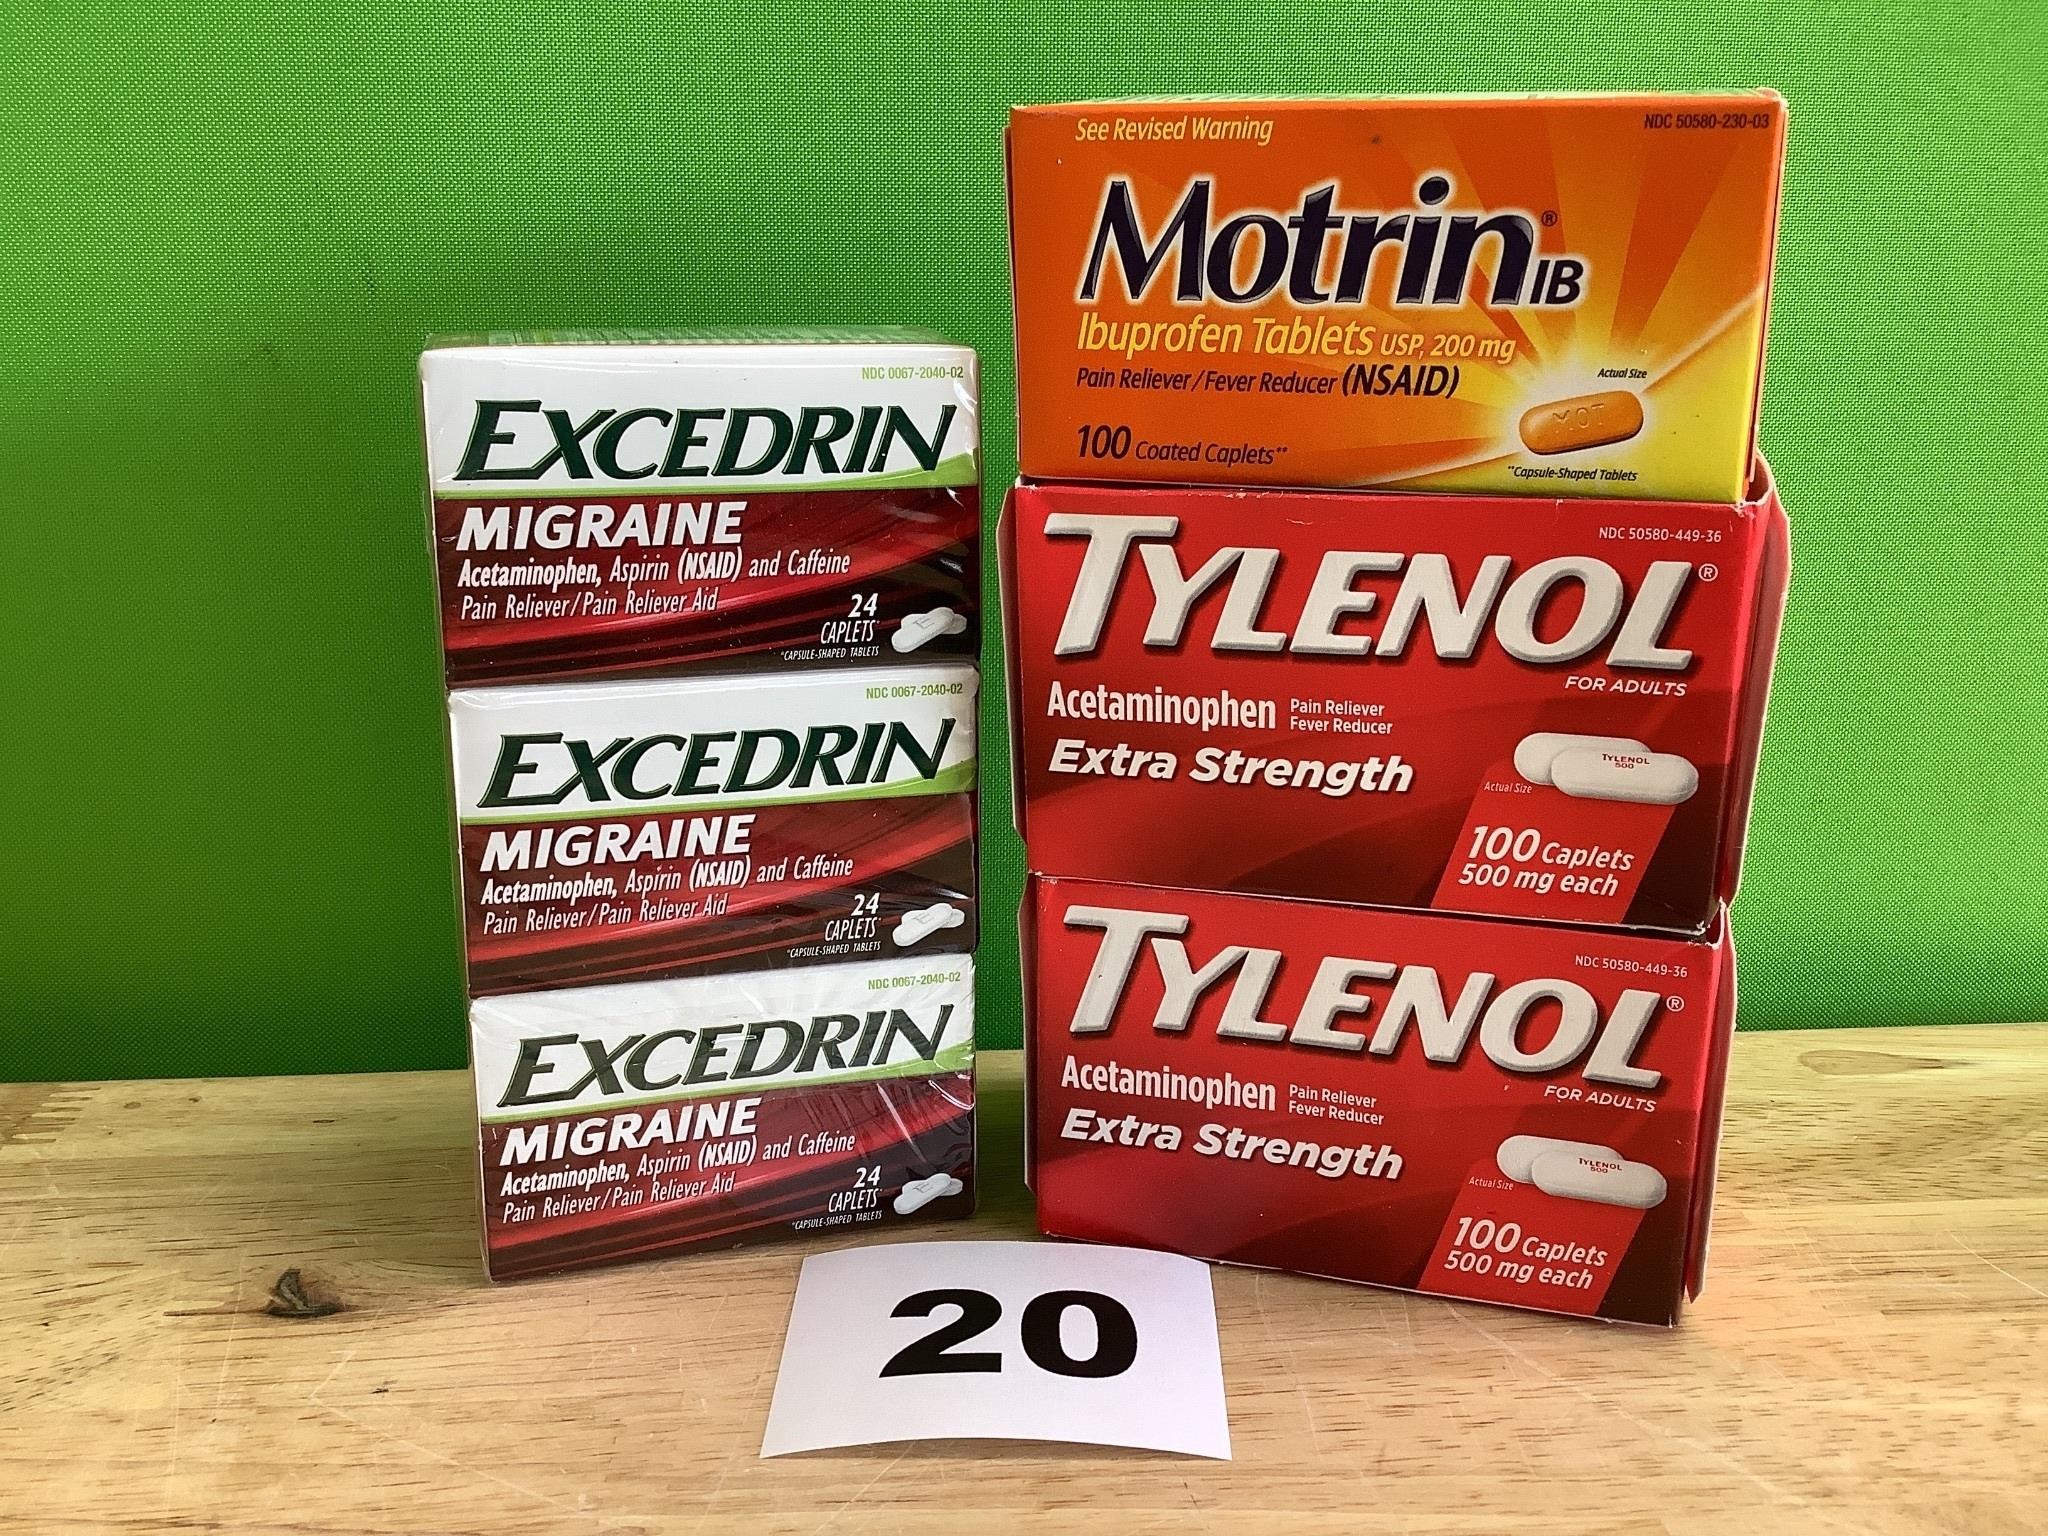 Excedrin, Motrin, & Tylenol lot of 6